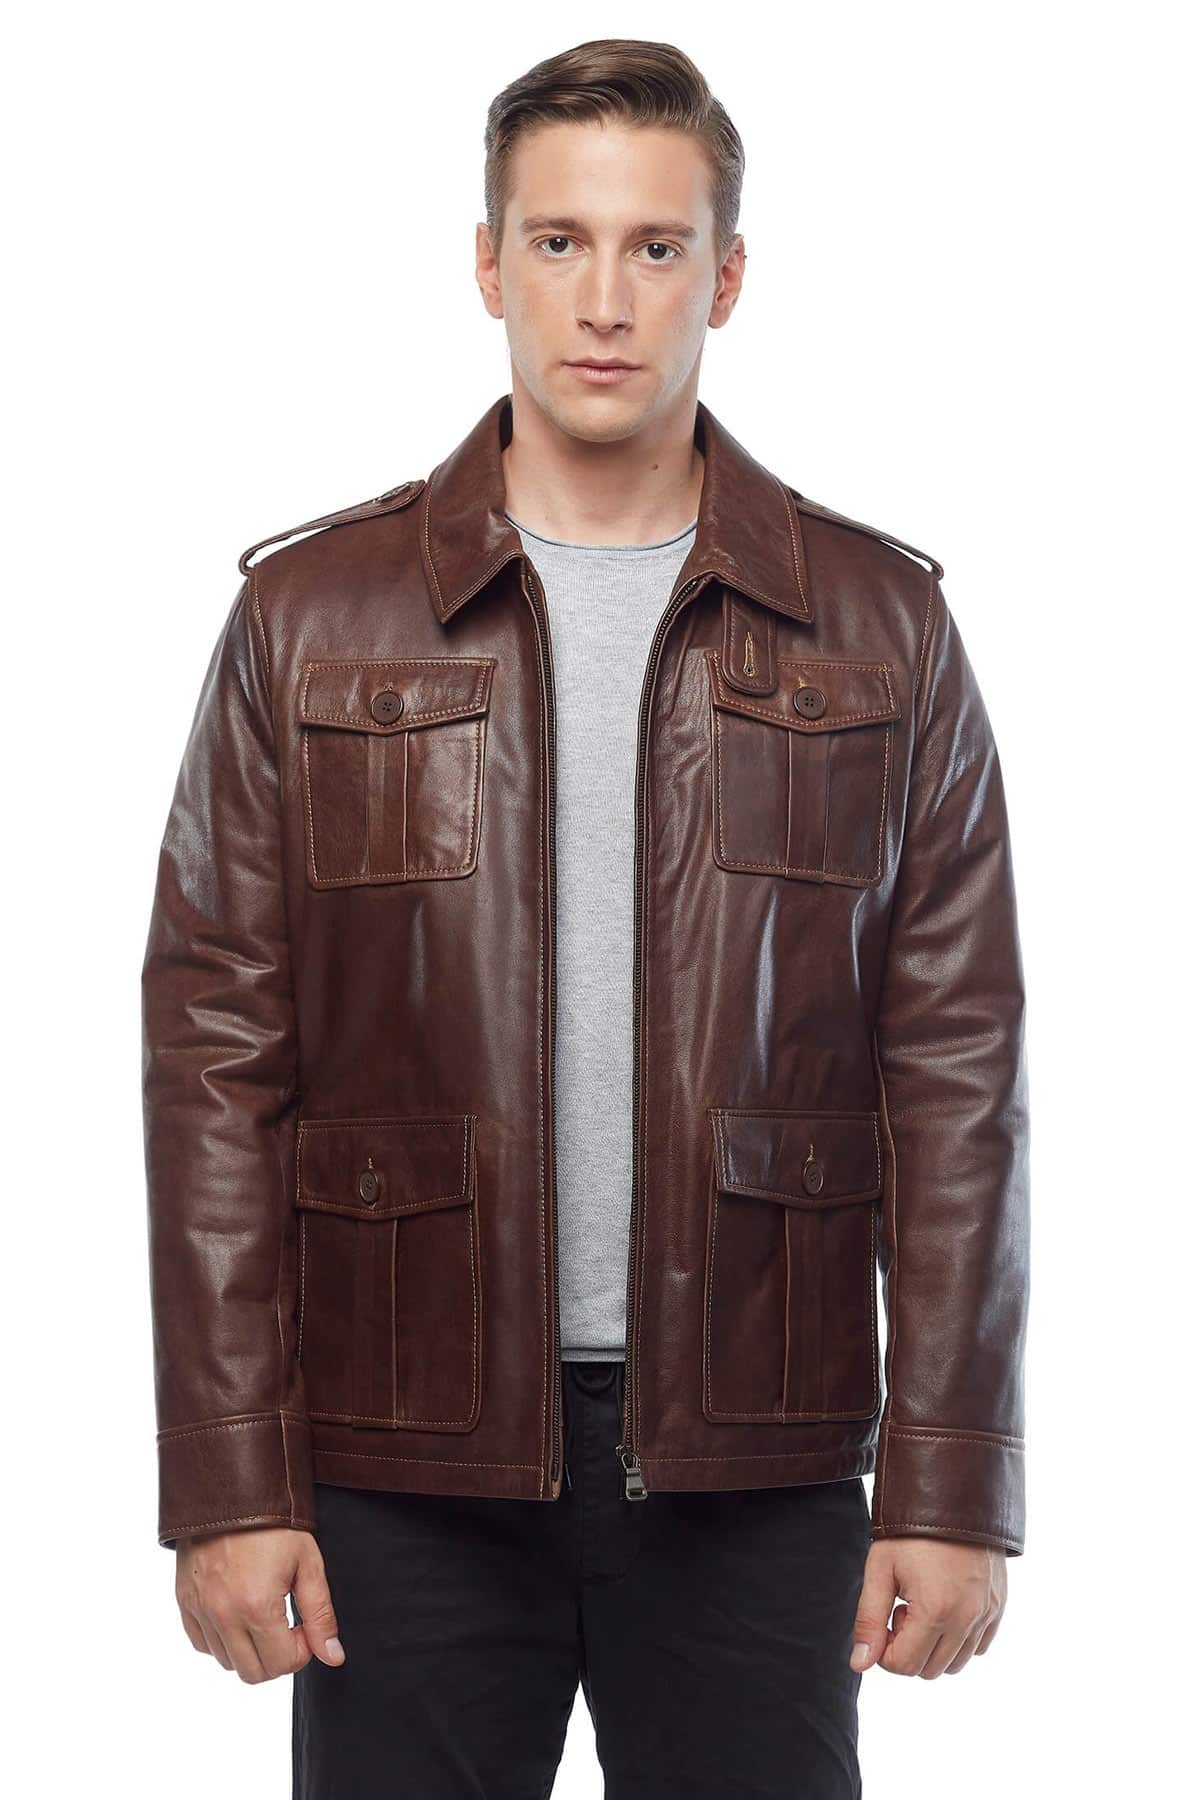 Jamie Campbell Bower Genuine Leather Jacket Brown - Urban Fashion Studio